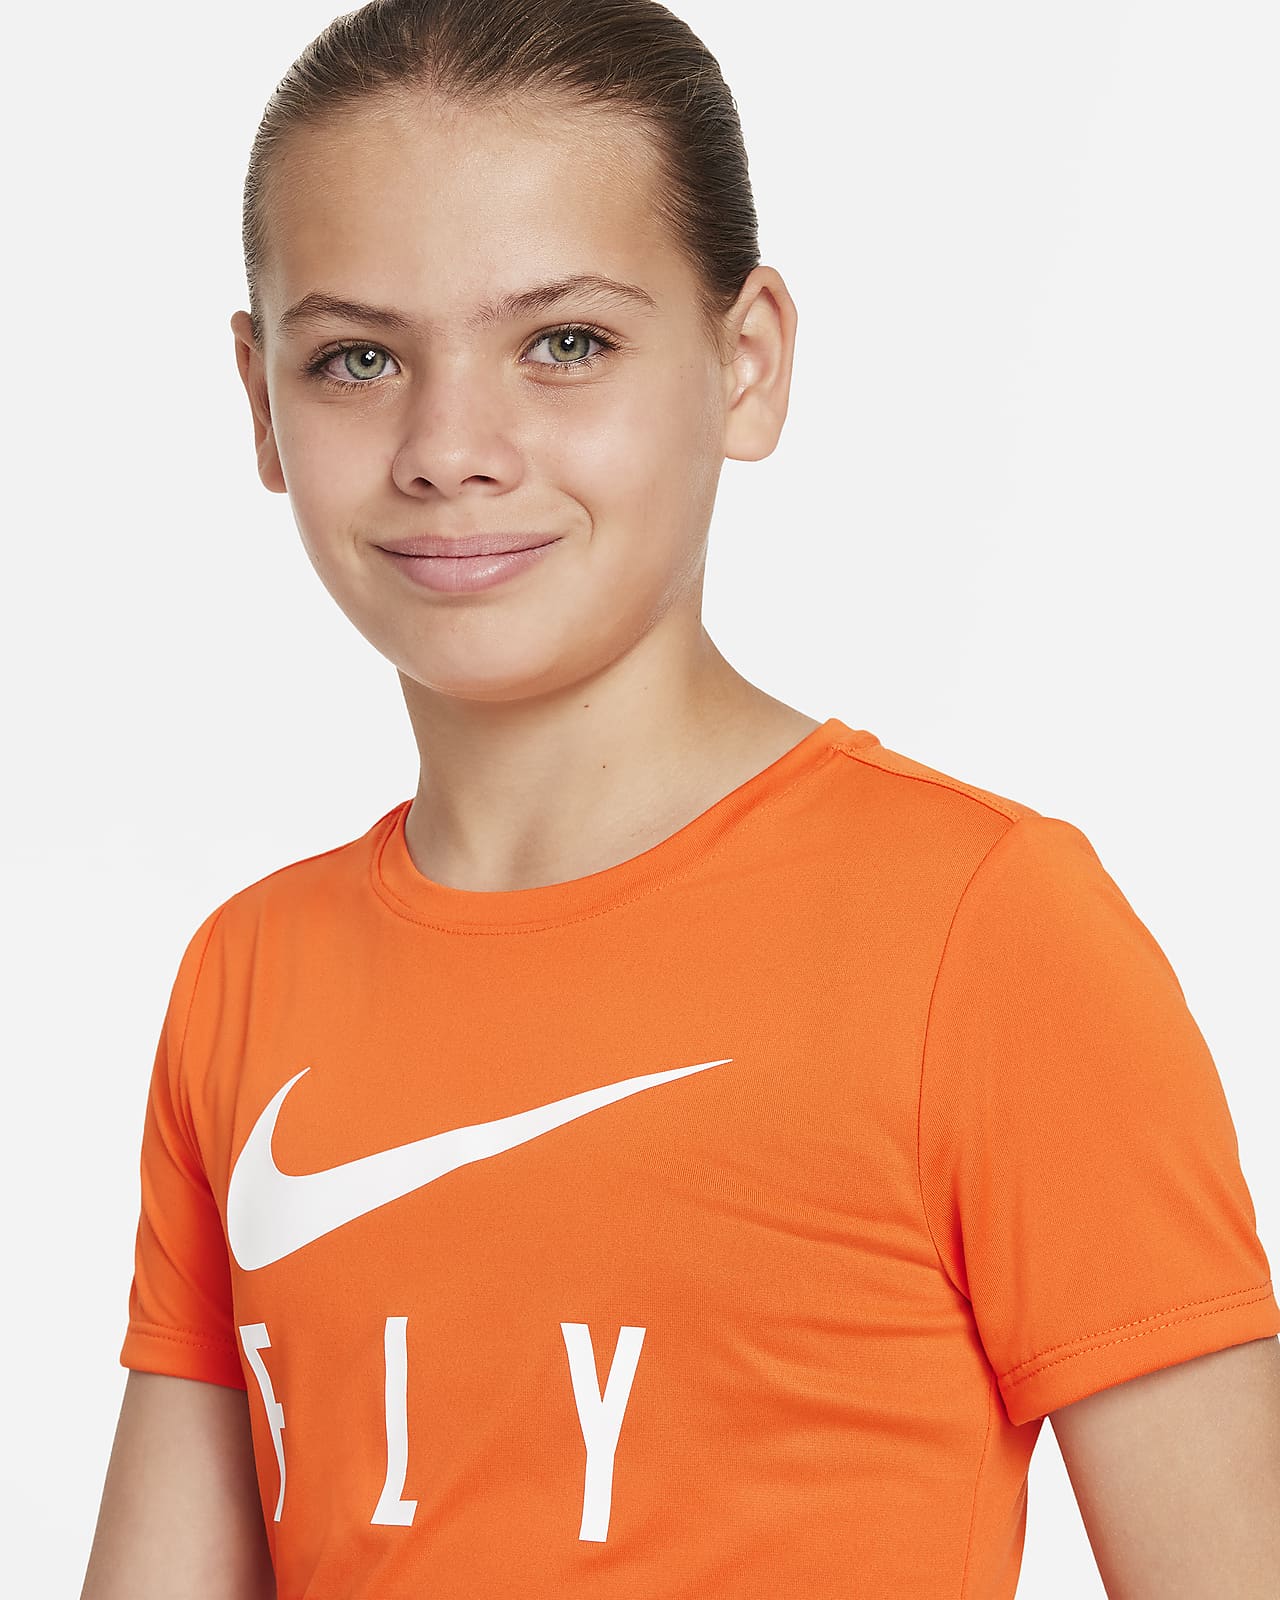 Nike Dri-FIT One Big T-Shirt. Fly (Girls\') Kids\' Swoosh